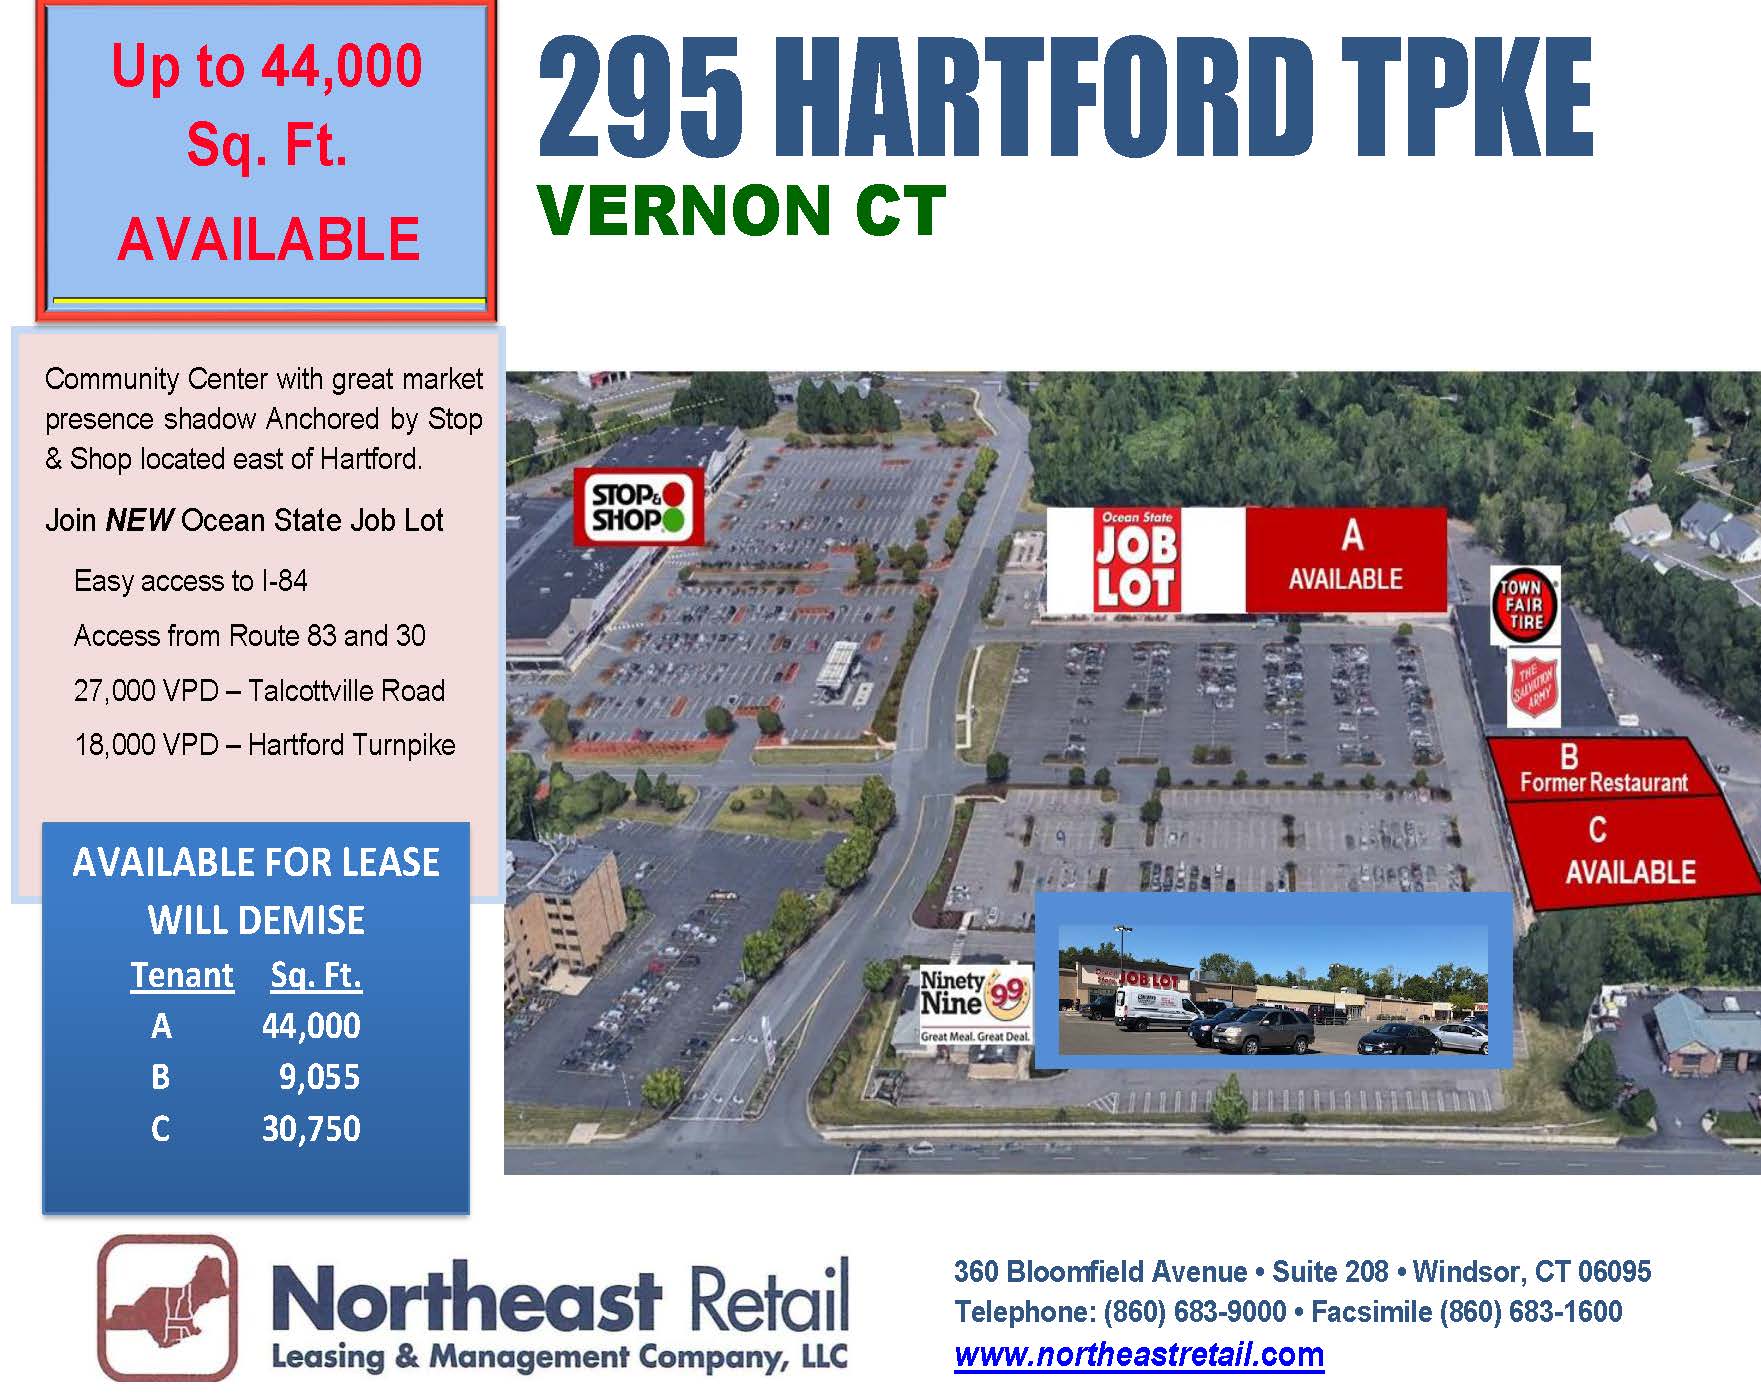 Vernon, CT Northeast Retail